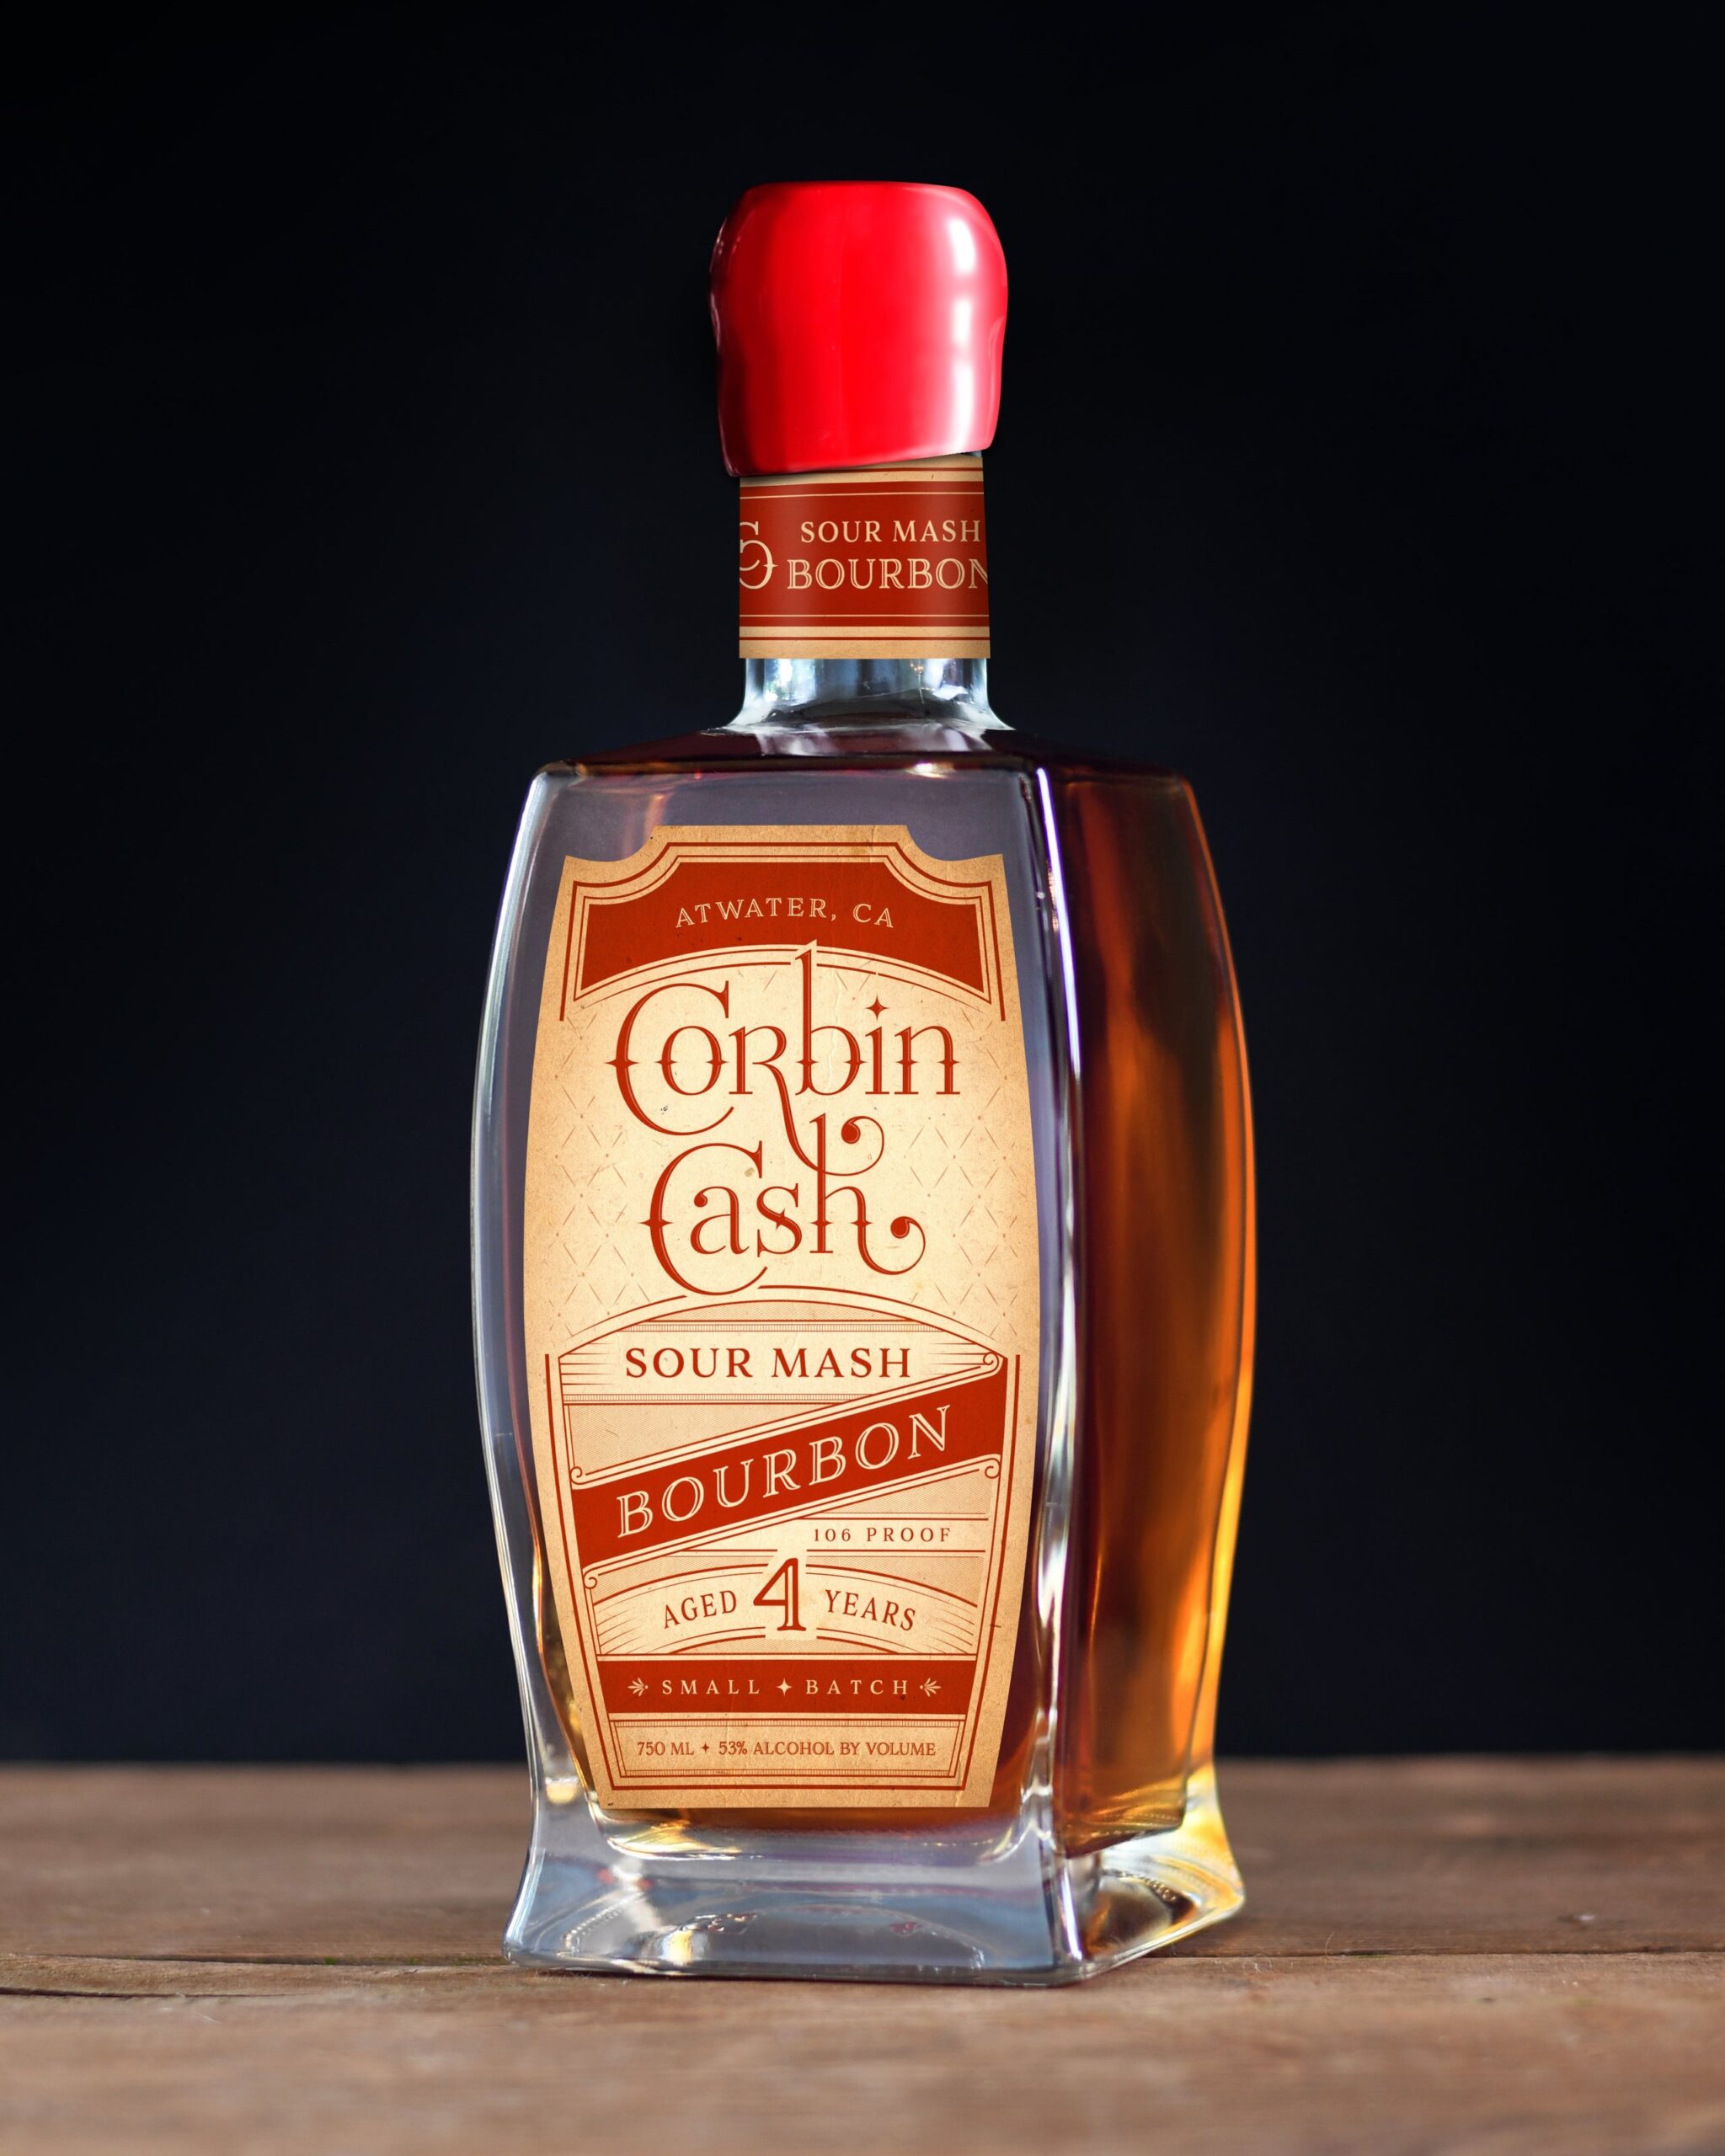 204: Corbin Cash Distillery – Farm to Glass Whiskey in California